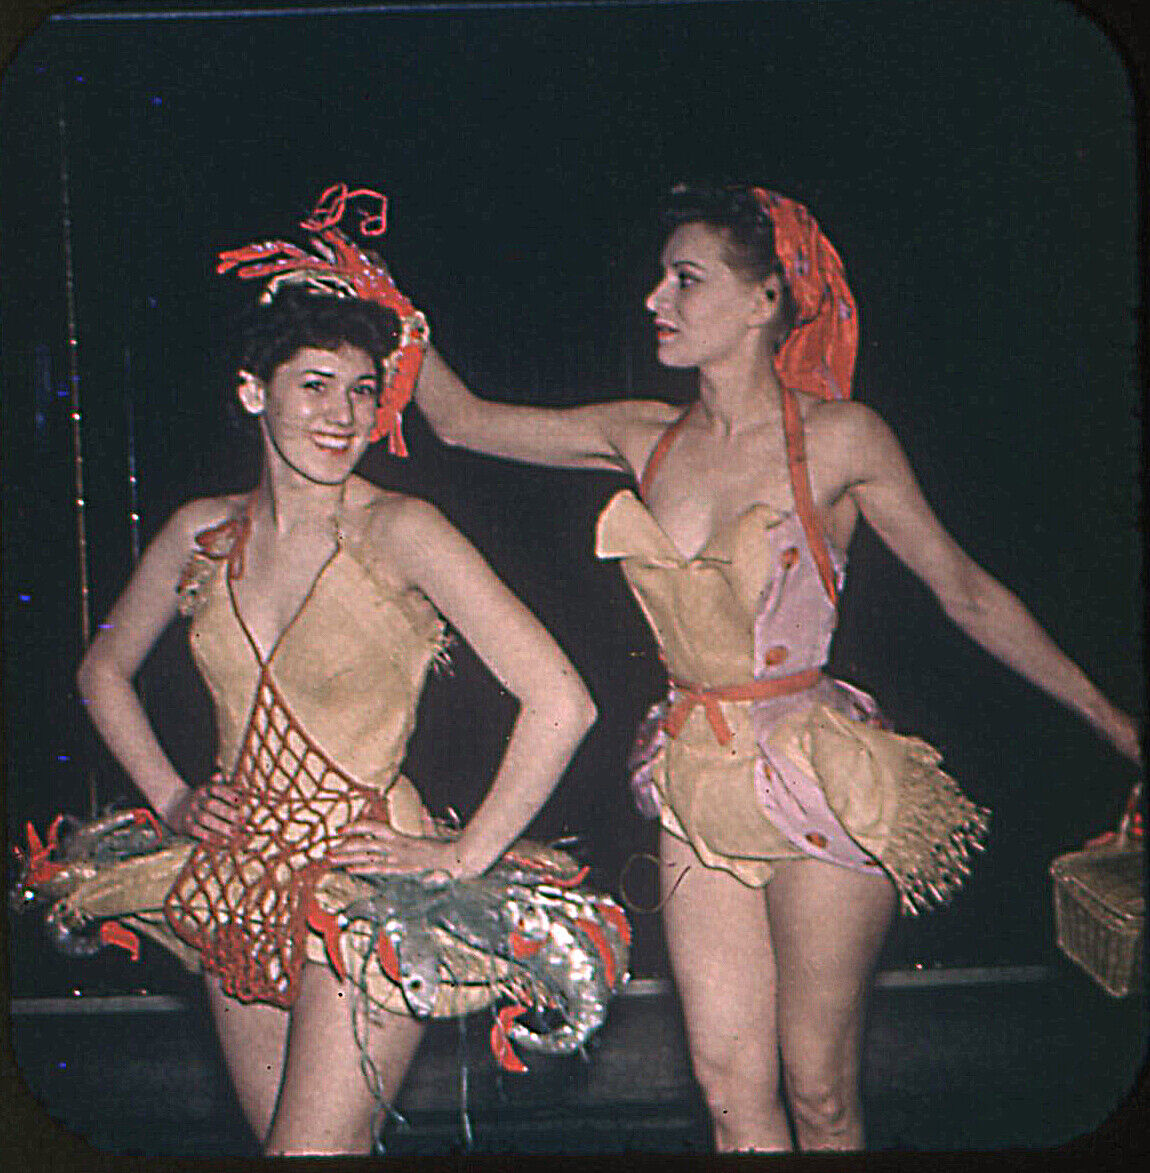 2 Colorelief Risque Cards - Montmartre Cabaret "Eve" 1950s Nude Stars - 16 image Без бренда - фотография #5